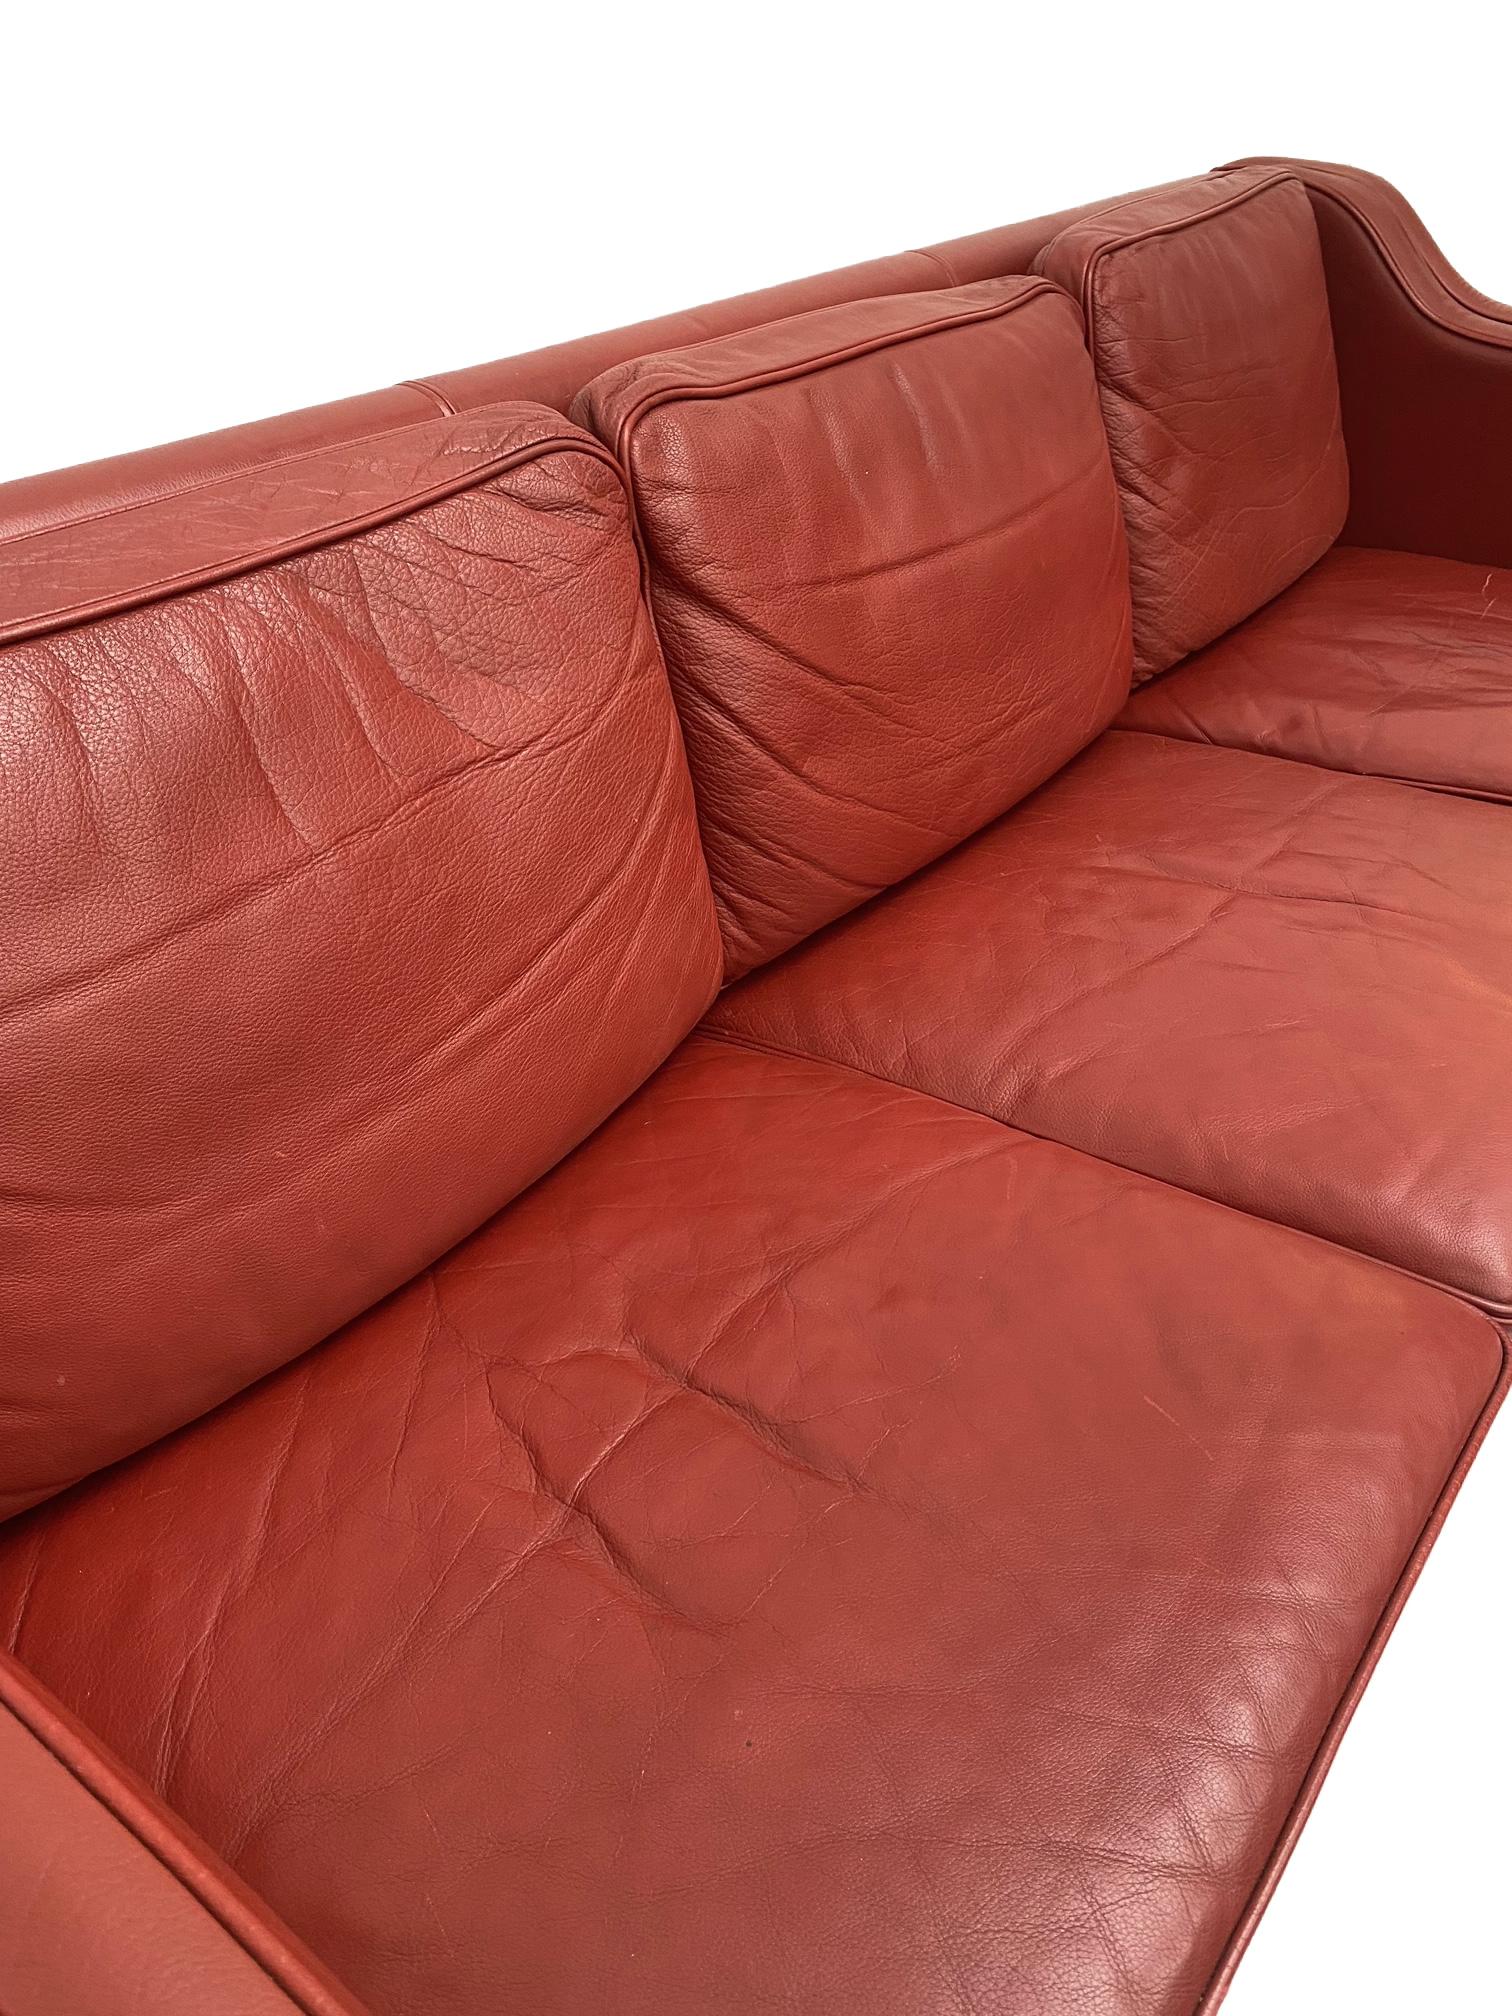 Mogens Hansen Red Leather 3 Seater Sofa, Danish, 1960s 9